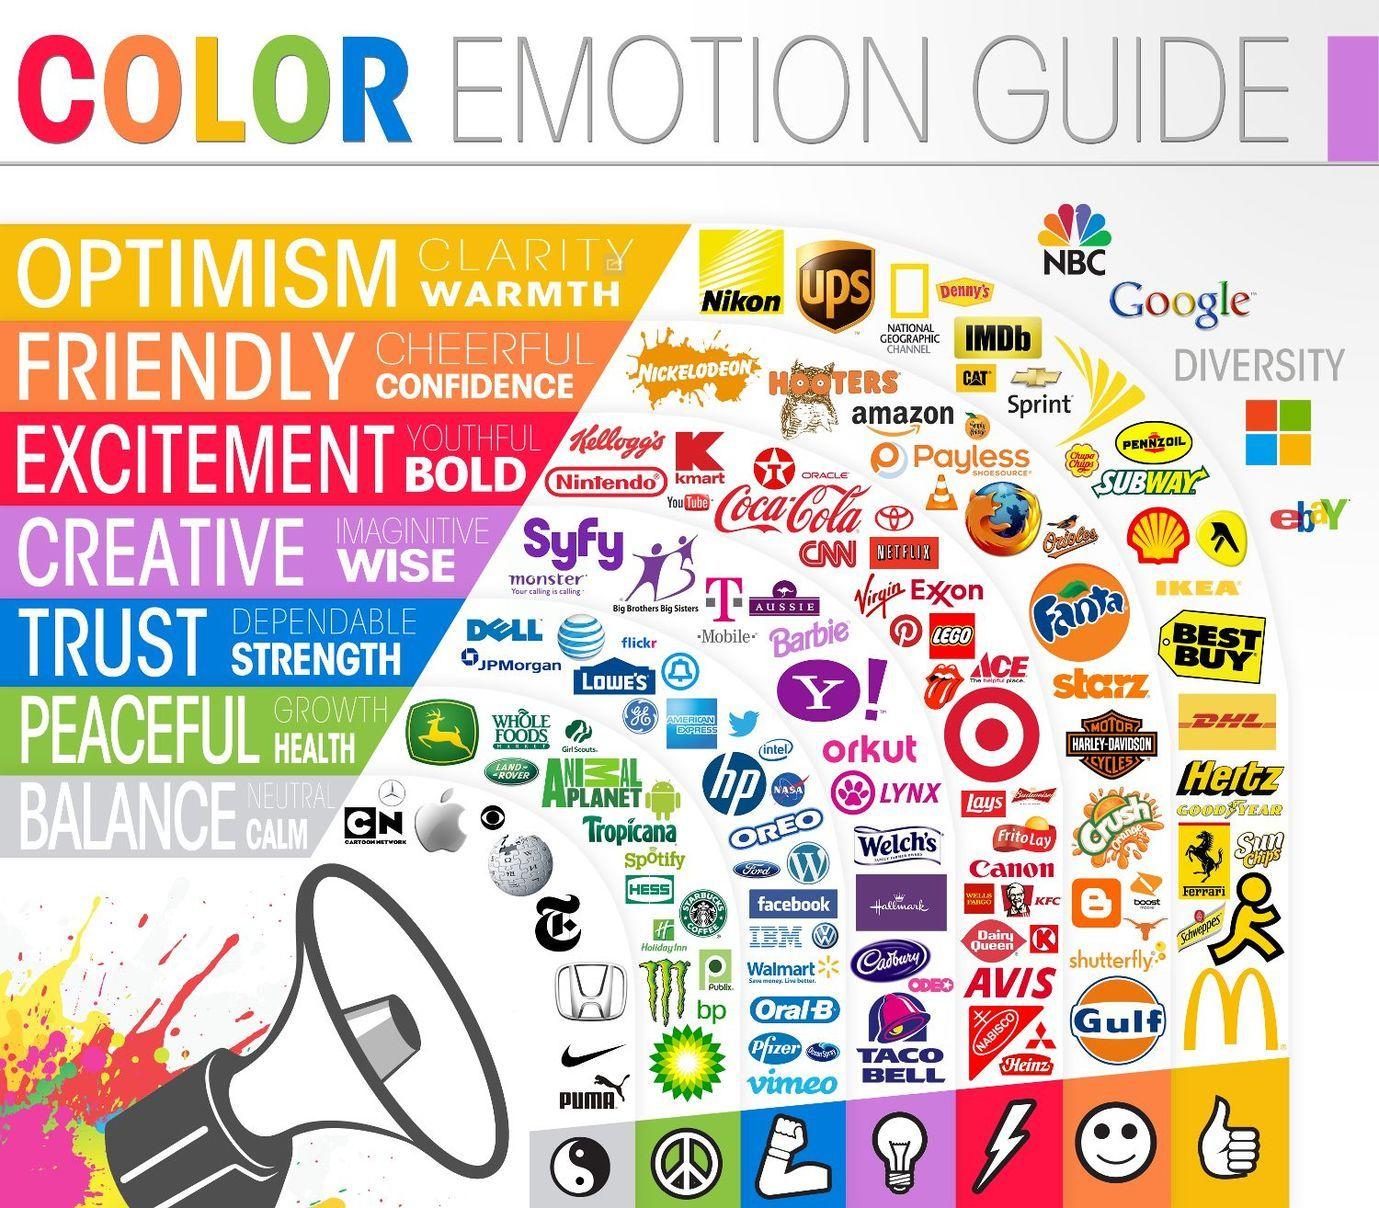 Landing page ideas color emotion guide